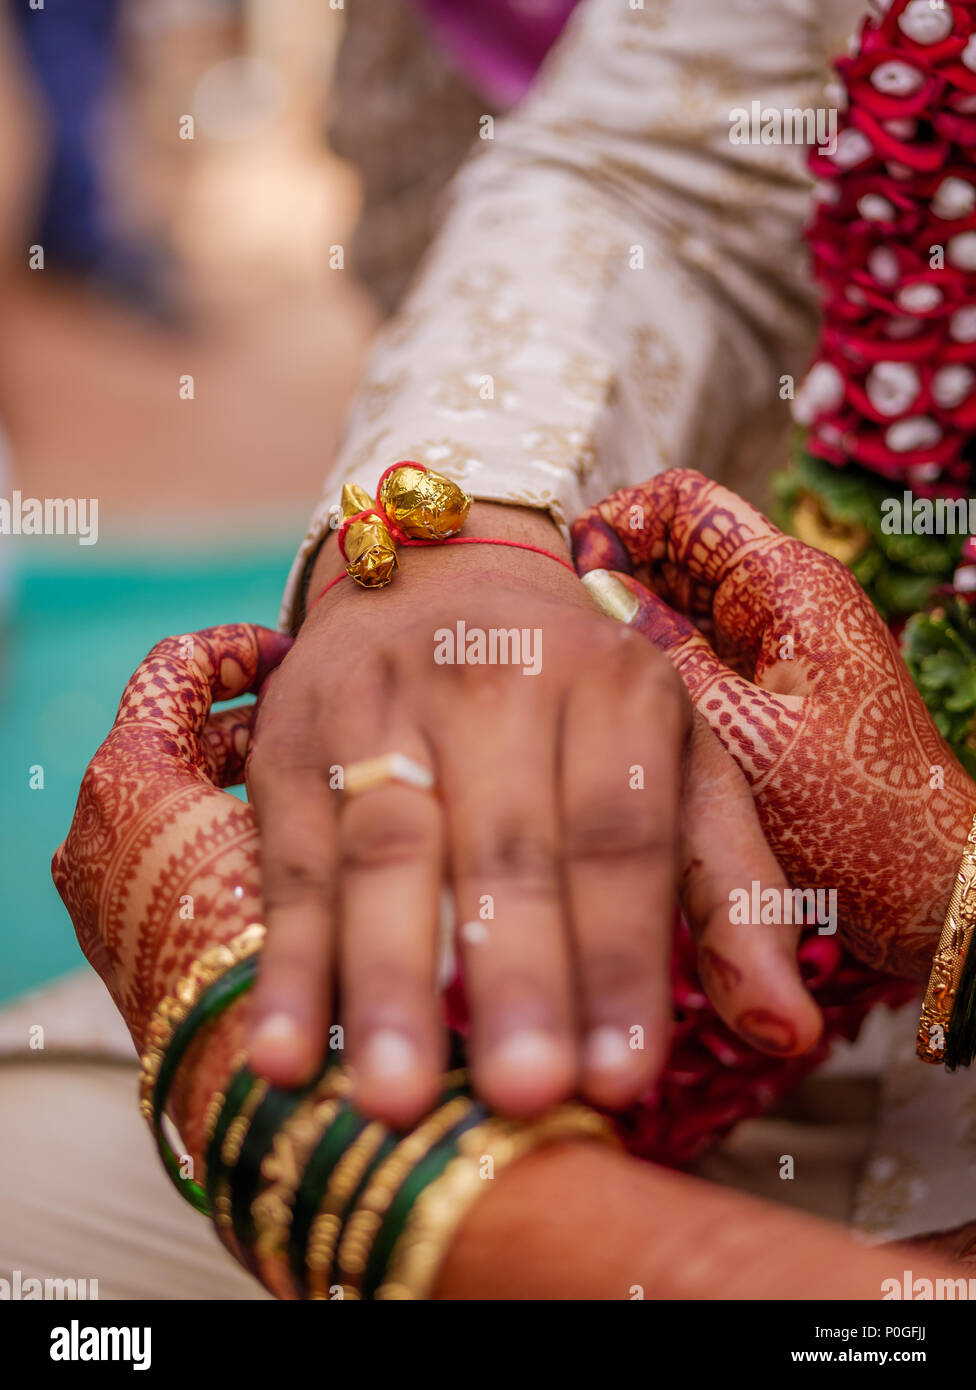 Sania Mirza, sister Anam dazzle in ethnic outfits for Parineeti Chopra's  wedding - India Today